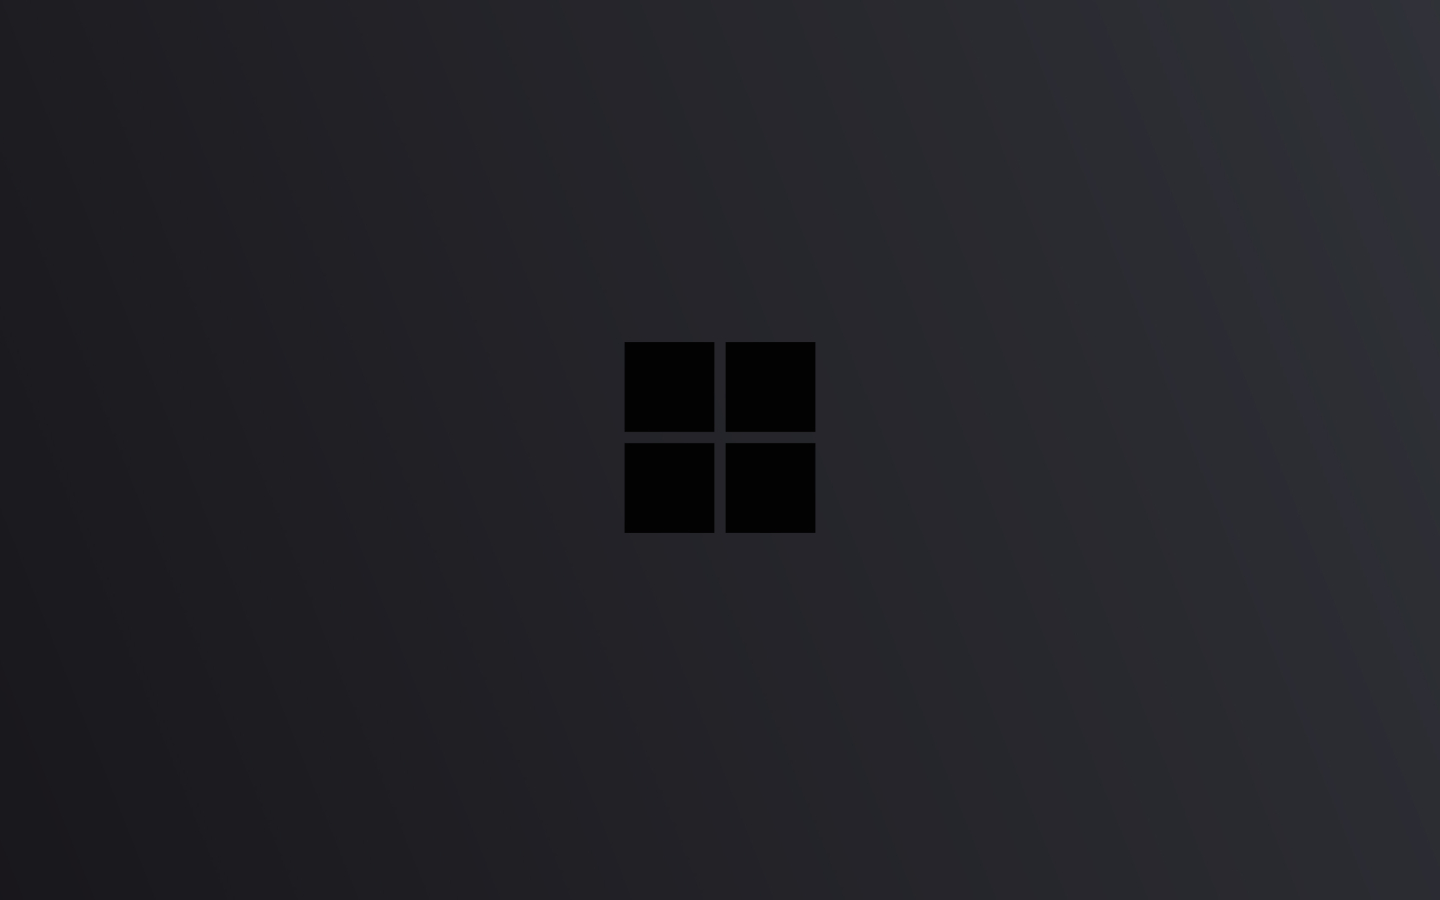 Download wallpaper: Windows Logo 2020 1440x900